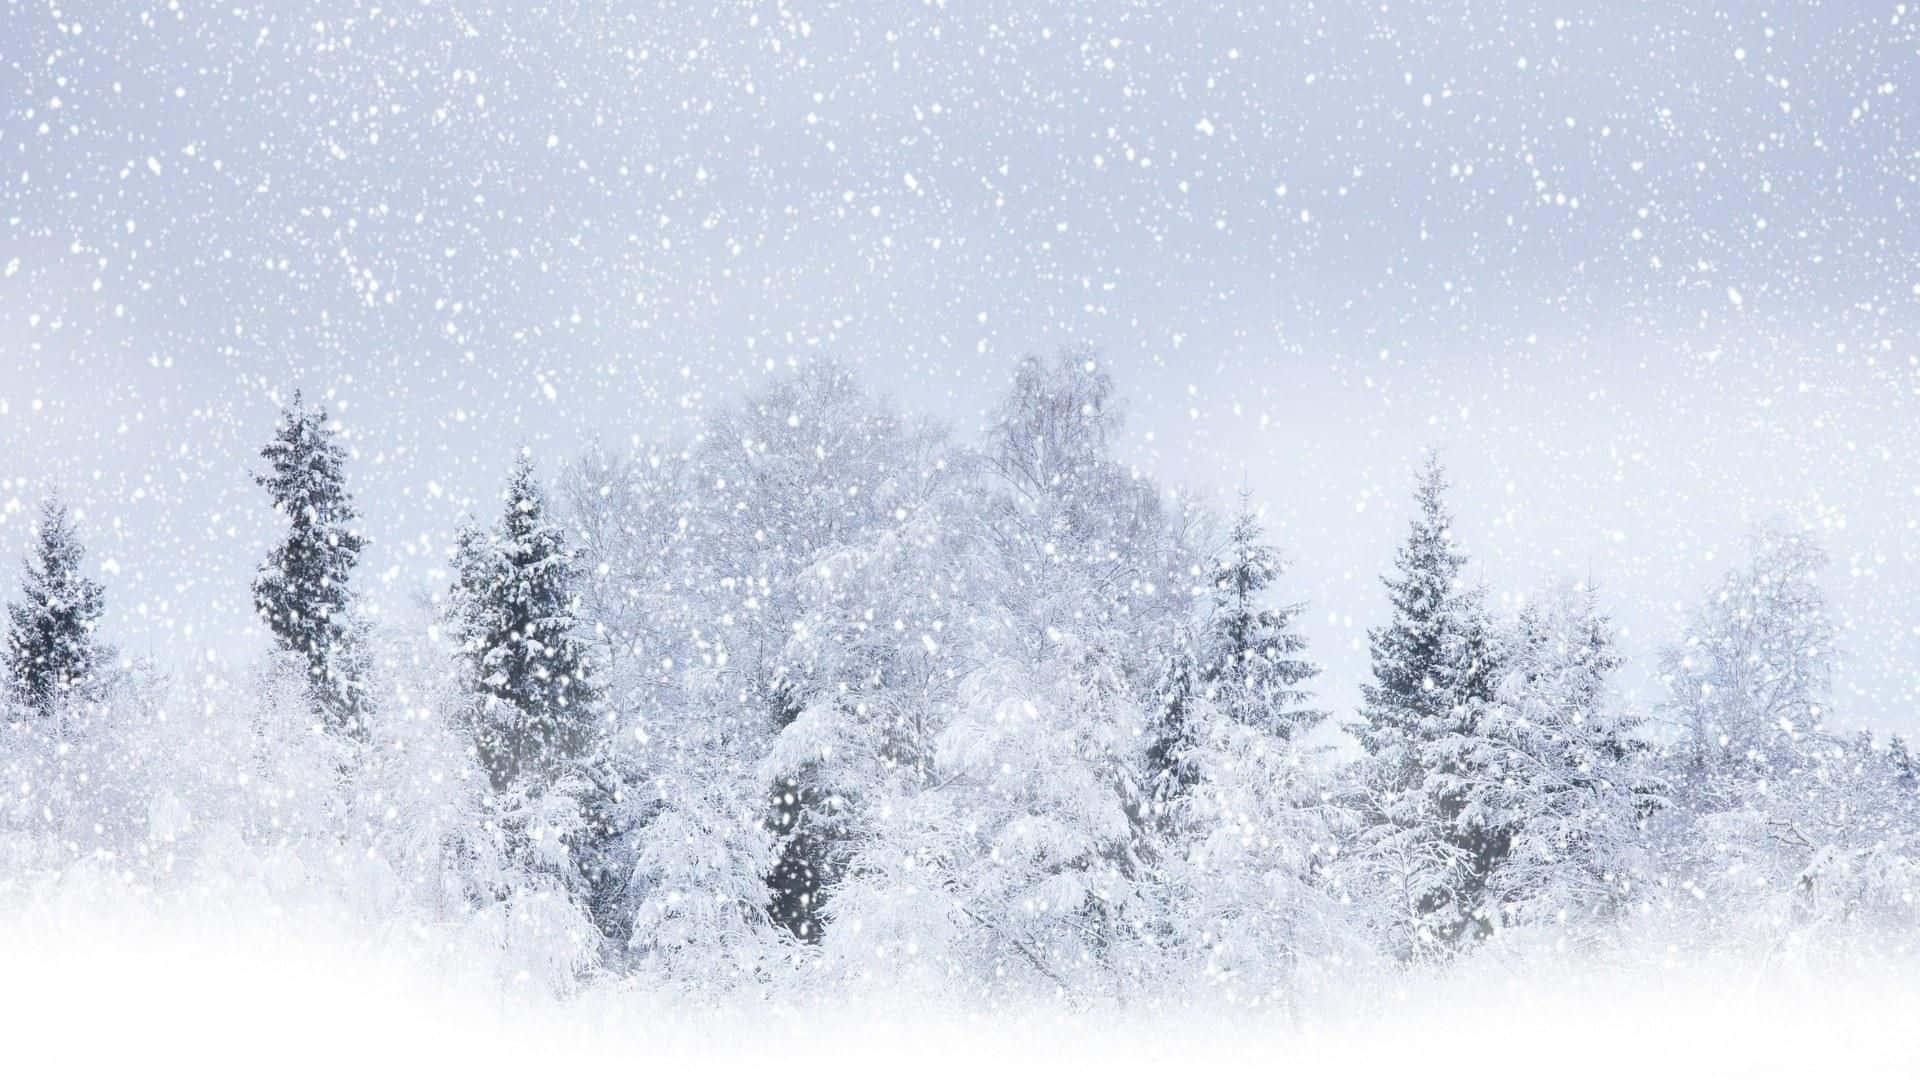 A High-Resolution Winter Scene of Snow